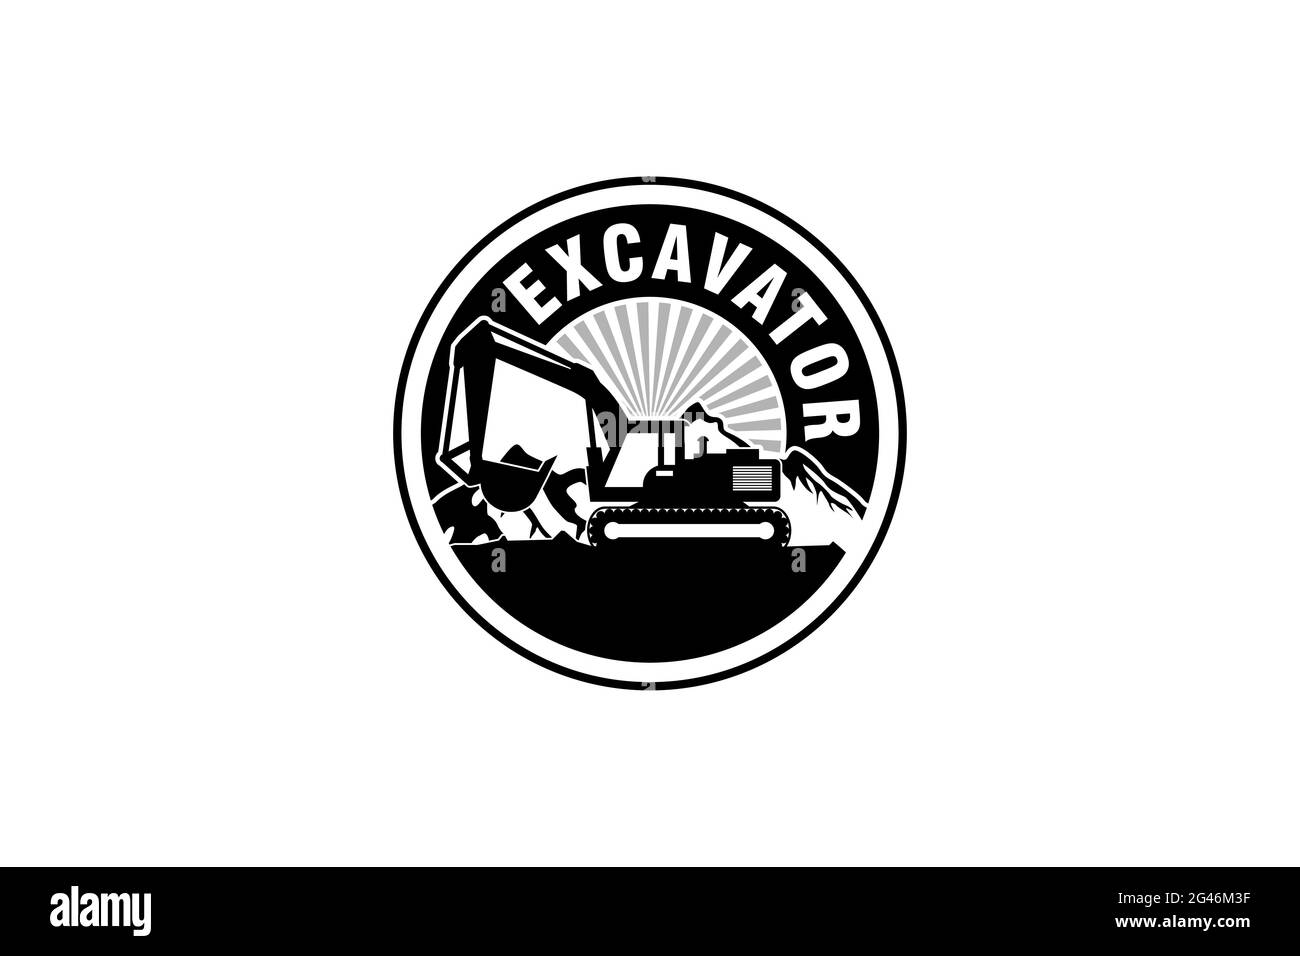 Excavator logo template vector. Heavy equipment logo vector for construction company. Creative excavator illustration for logo. Stock Vector